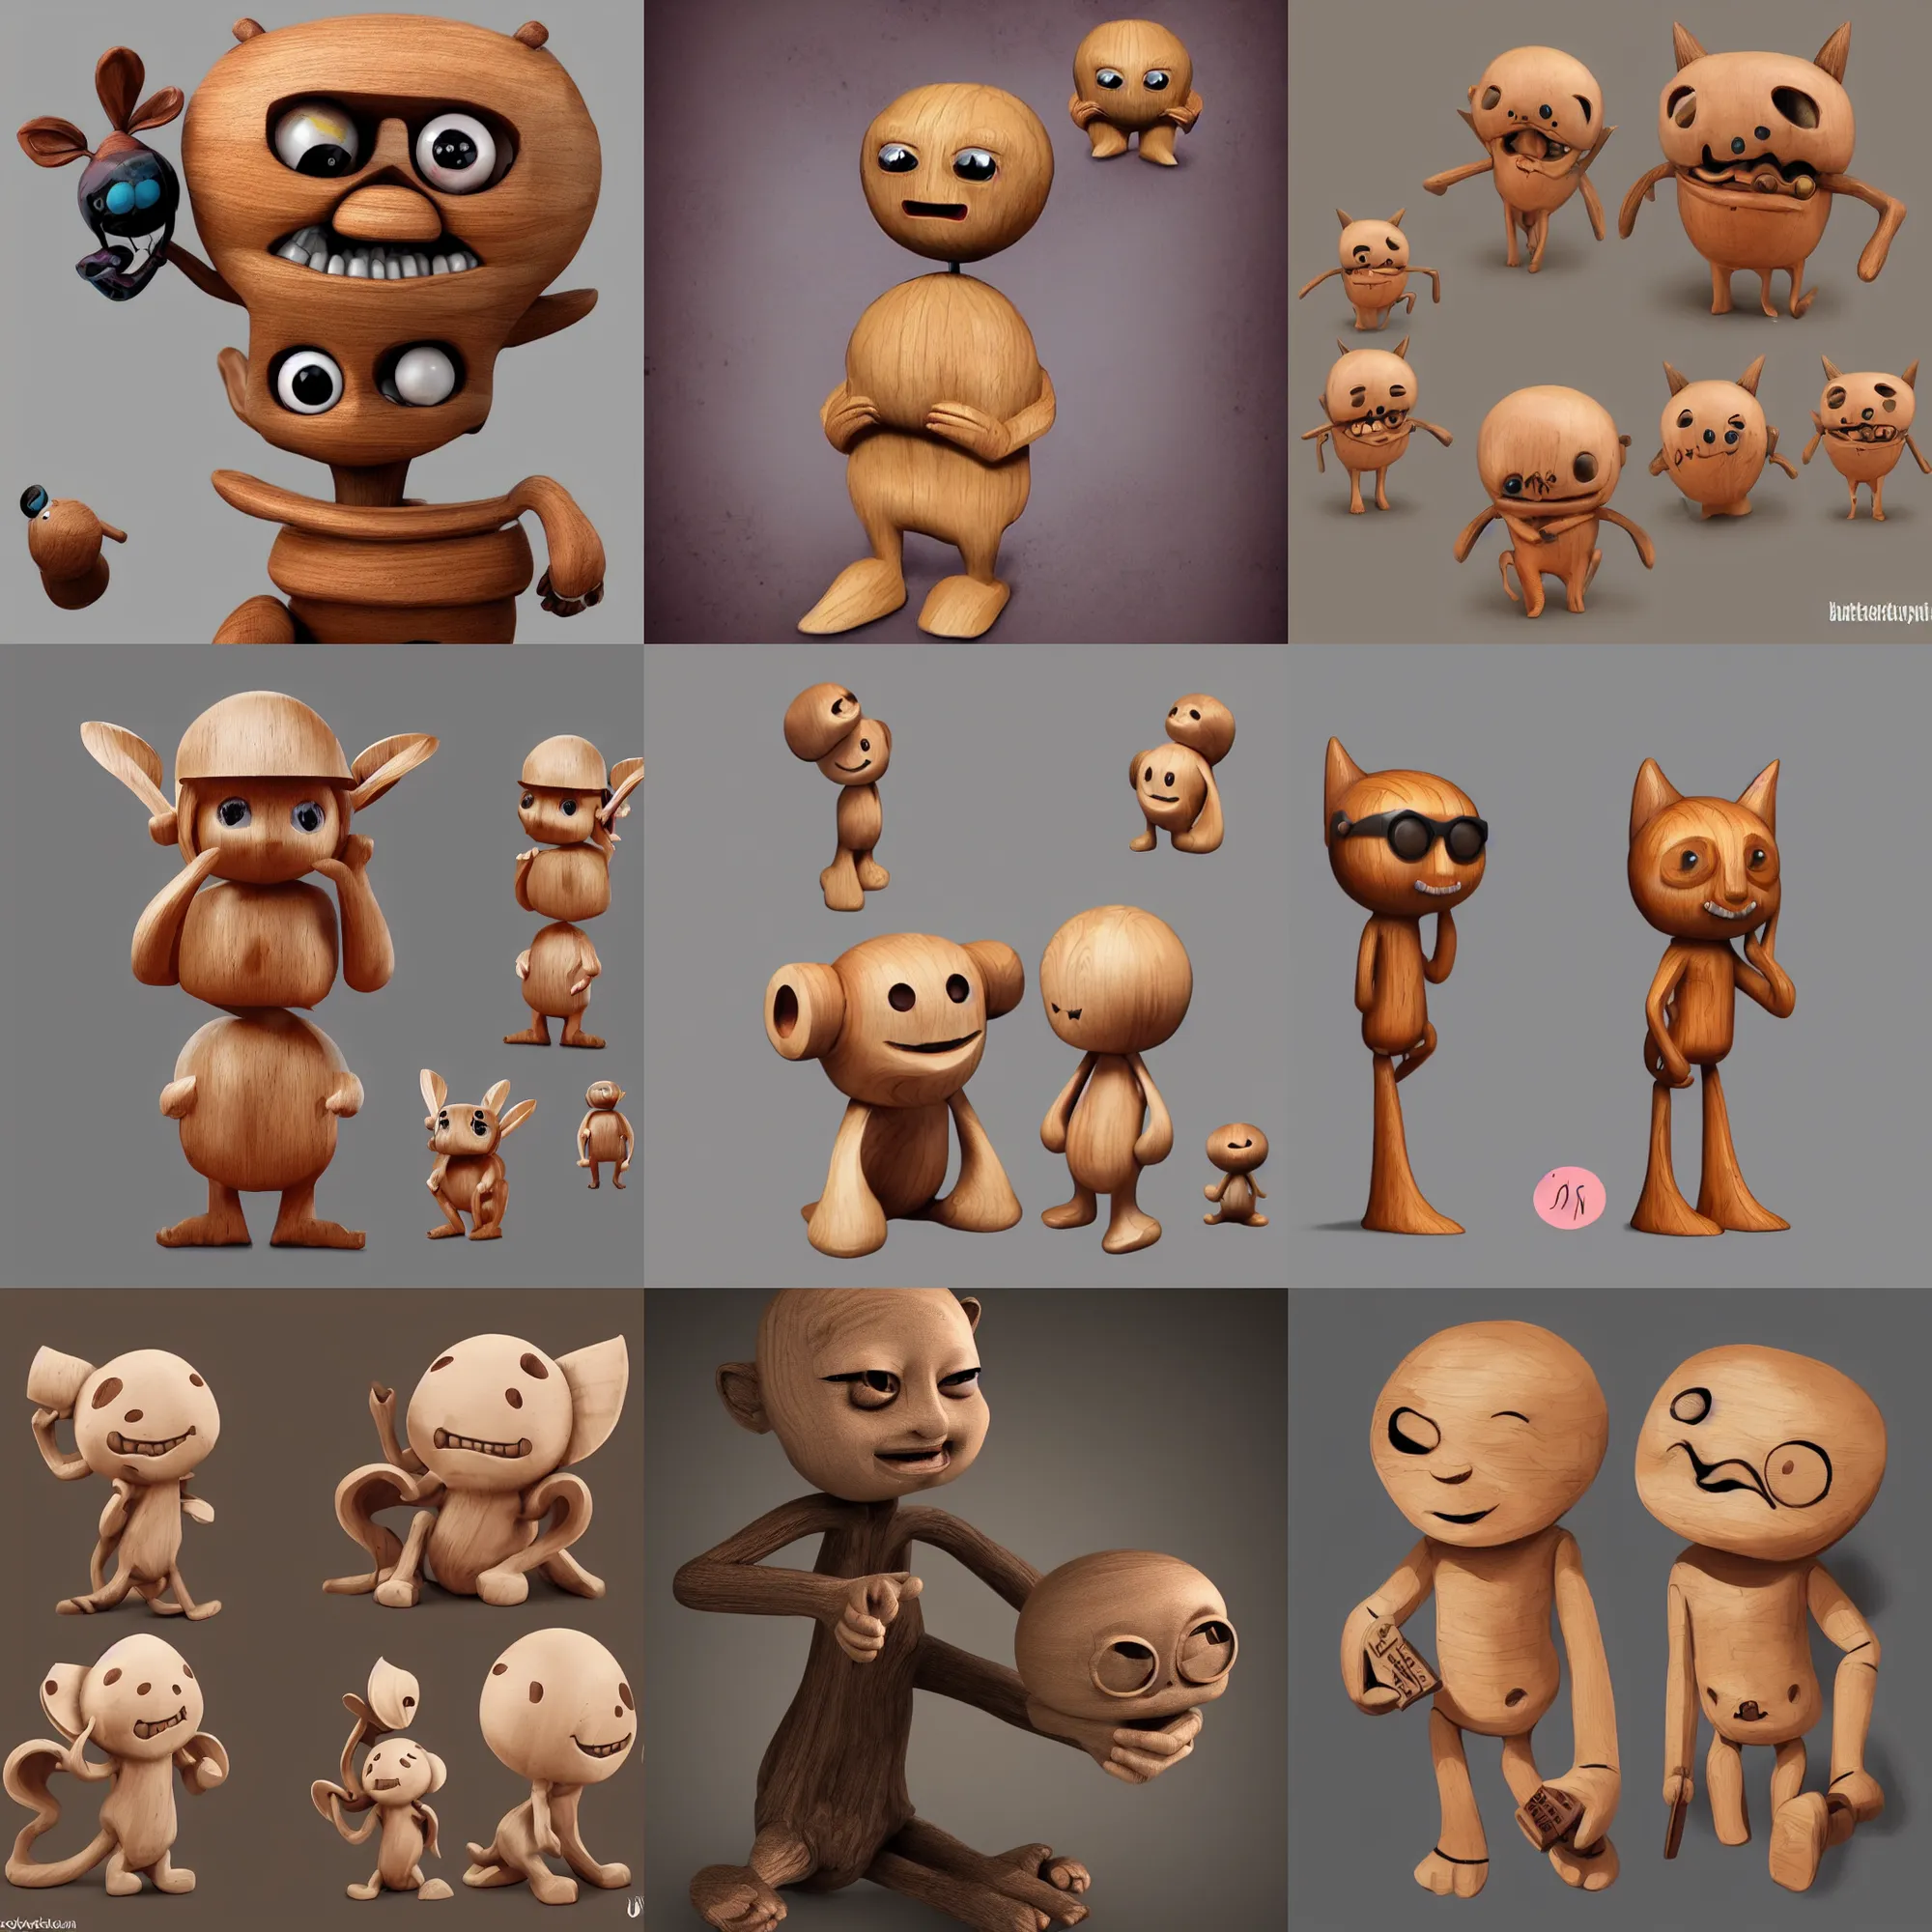 Prompt: cute funny figurine wooden, retrorobot, brtutalism, concept art, digital art